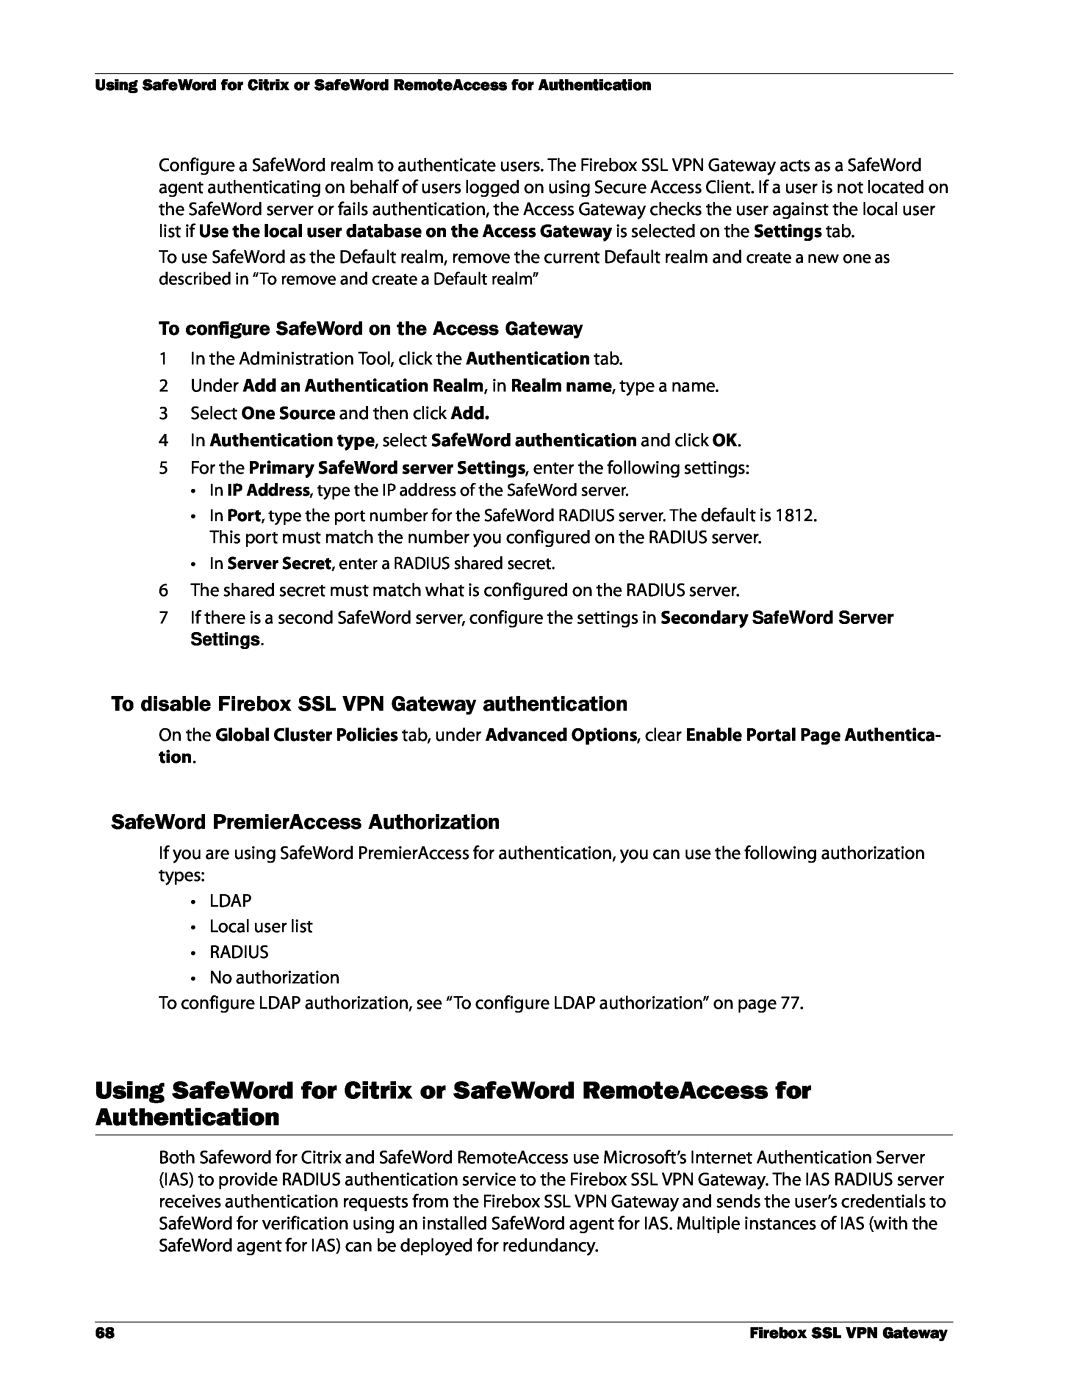 WatchGuard Technologies manual To disable Firebox SSL VPN Gateway authentication, SafeWord PremierAccess Authorization 